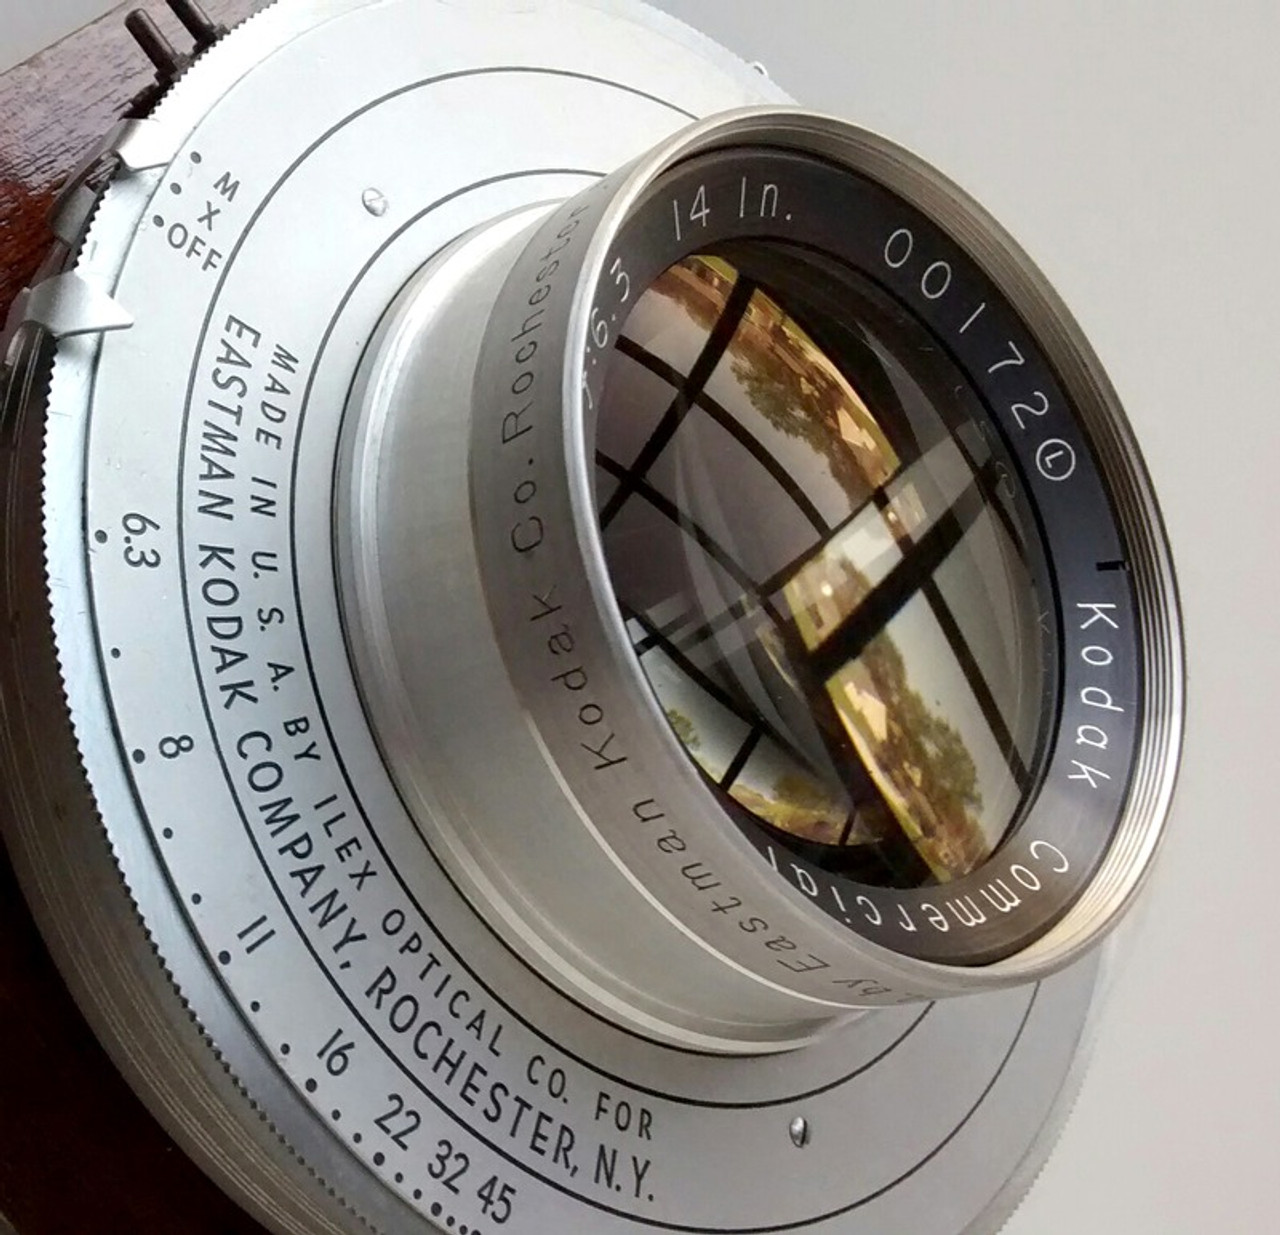 Kodak 14 Inch f/6.3 Commercial Ektar Lens in No. 5 Ilex Universal Synchro  Shutter - Surplus Camera Gear